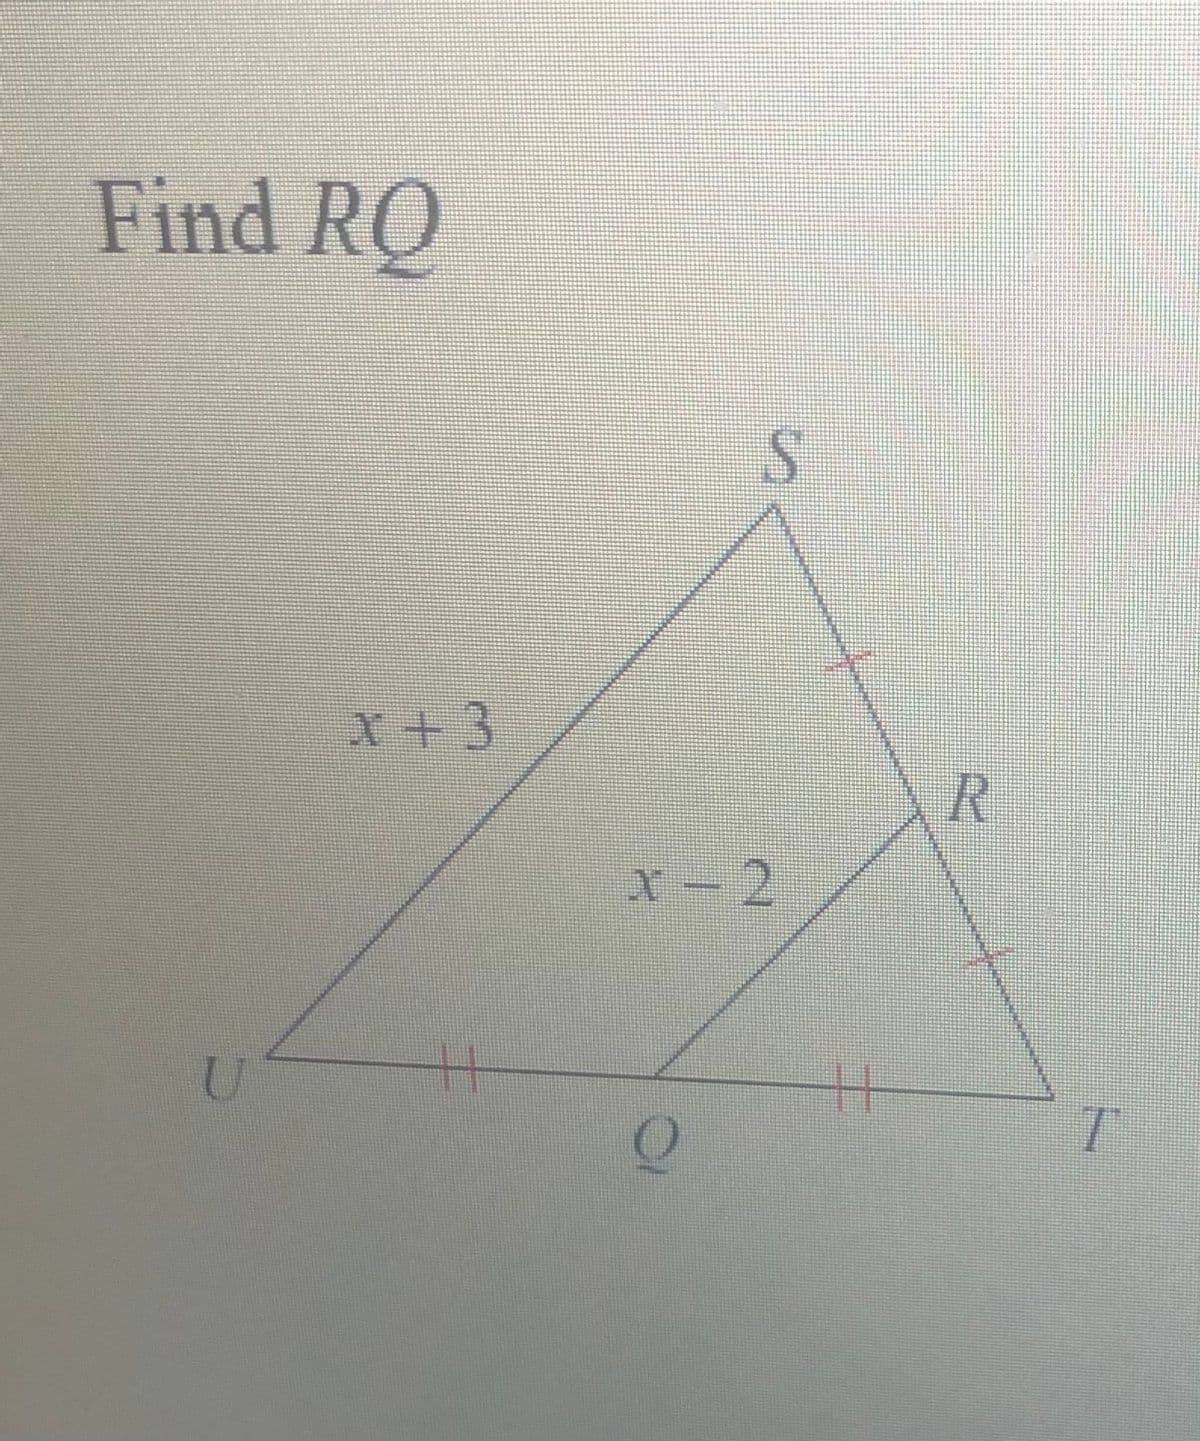 Find RQ
x+3
R.
x-2
